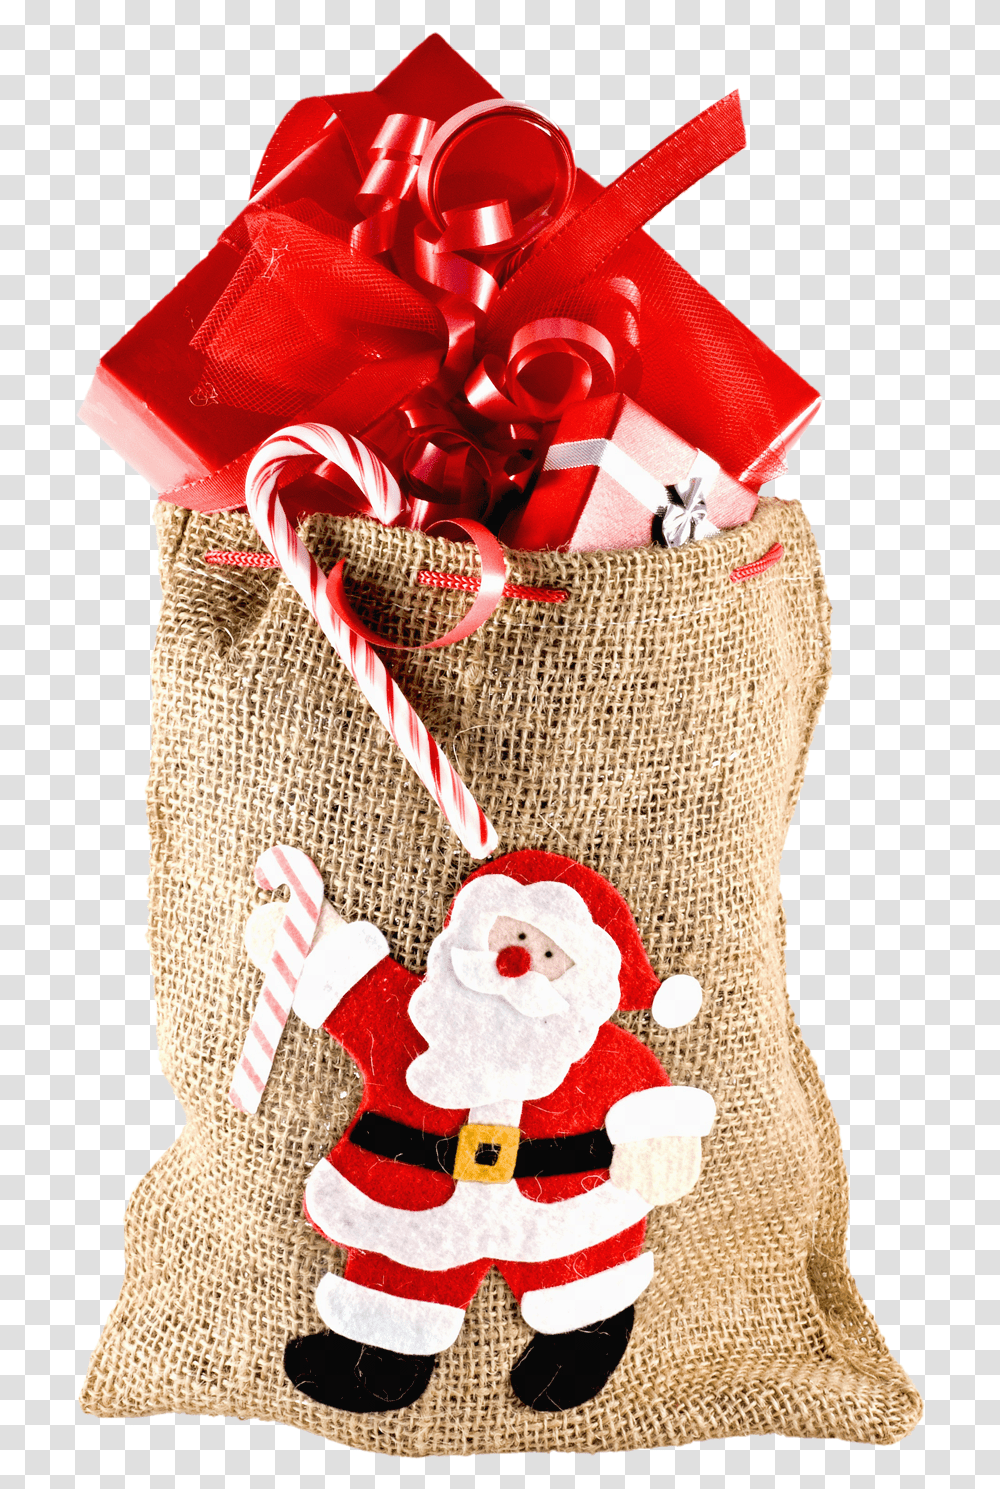 Christmas Sack Gift Image Pngpix Gift, Bag Transparent Png